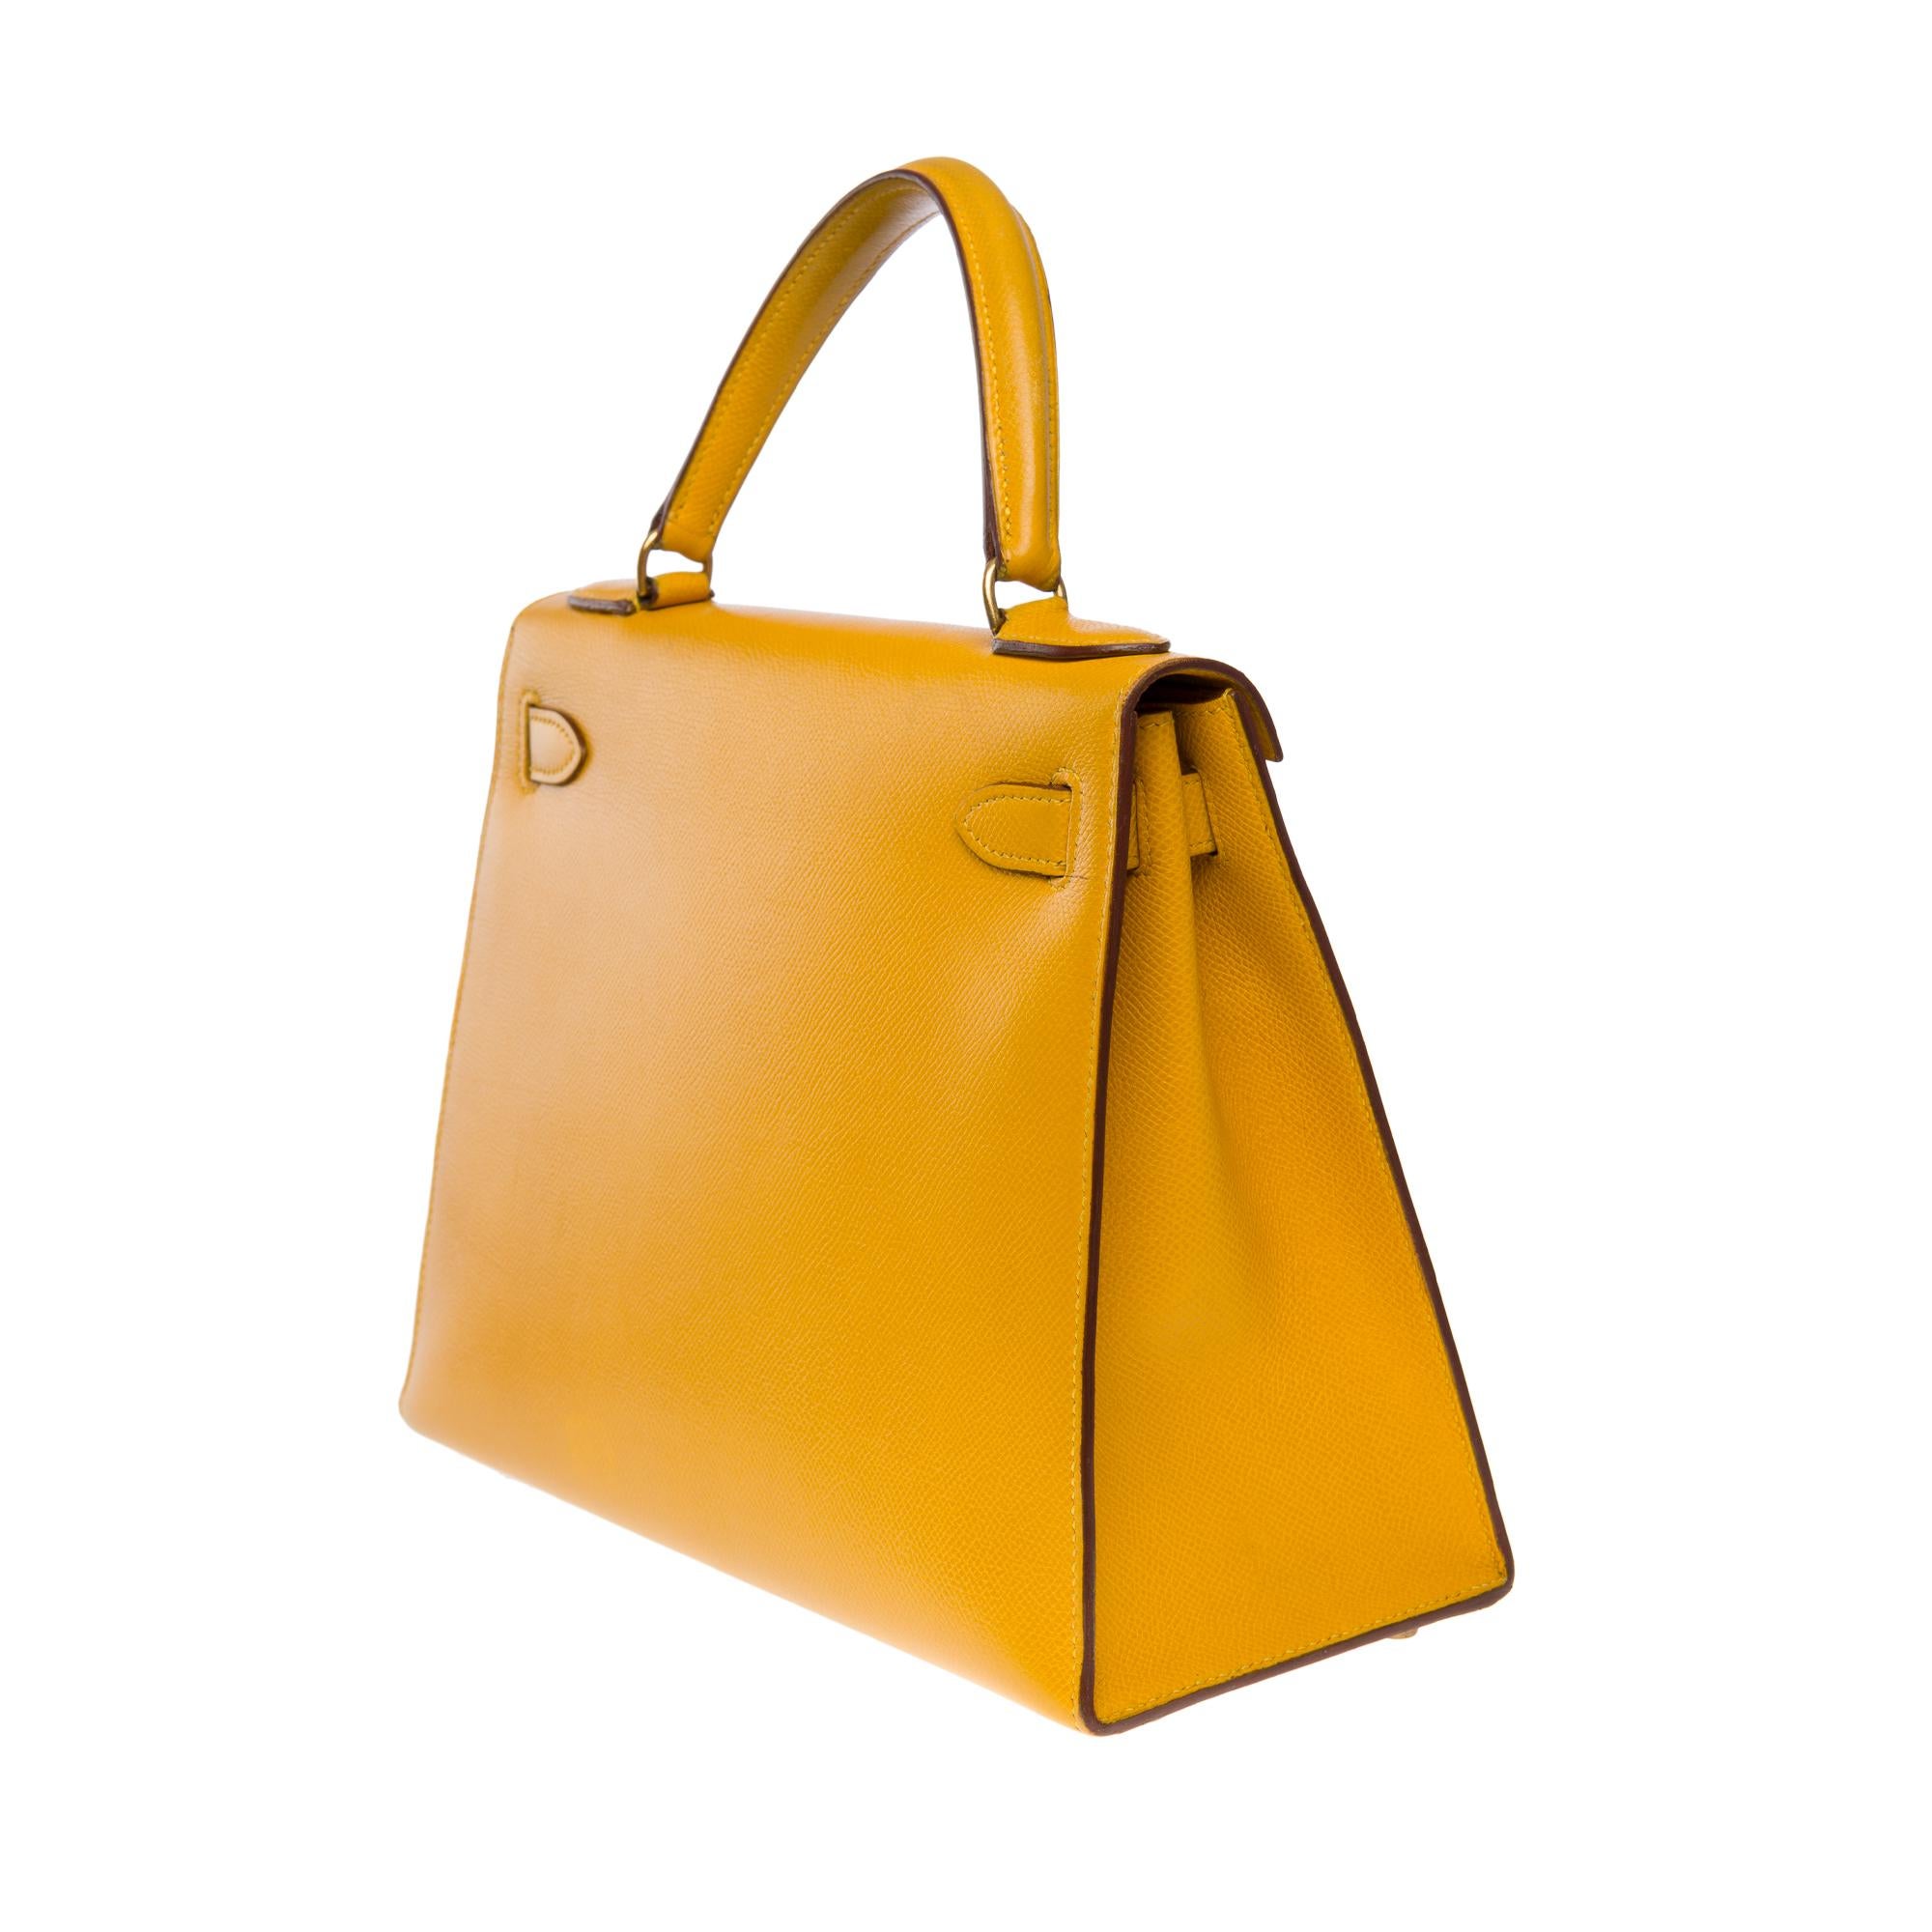 Women's Bright Hermès Kelly 28 sellier handbag strap in Courchevel Yellow leather, GHW